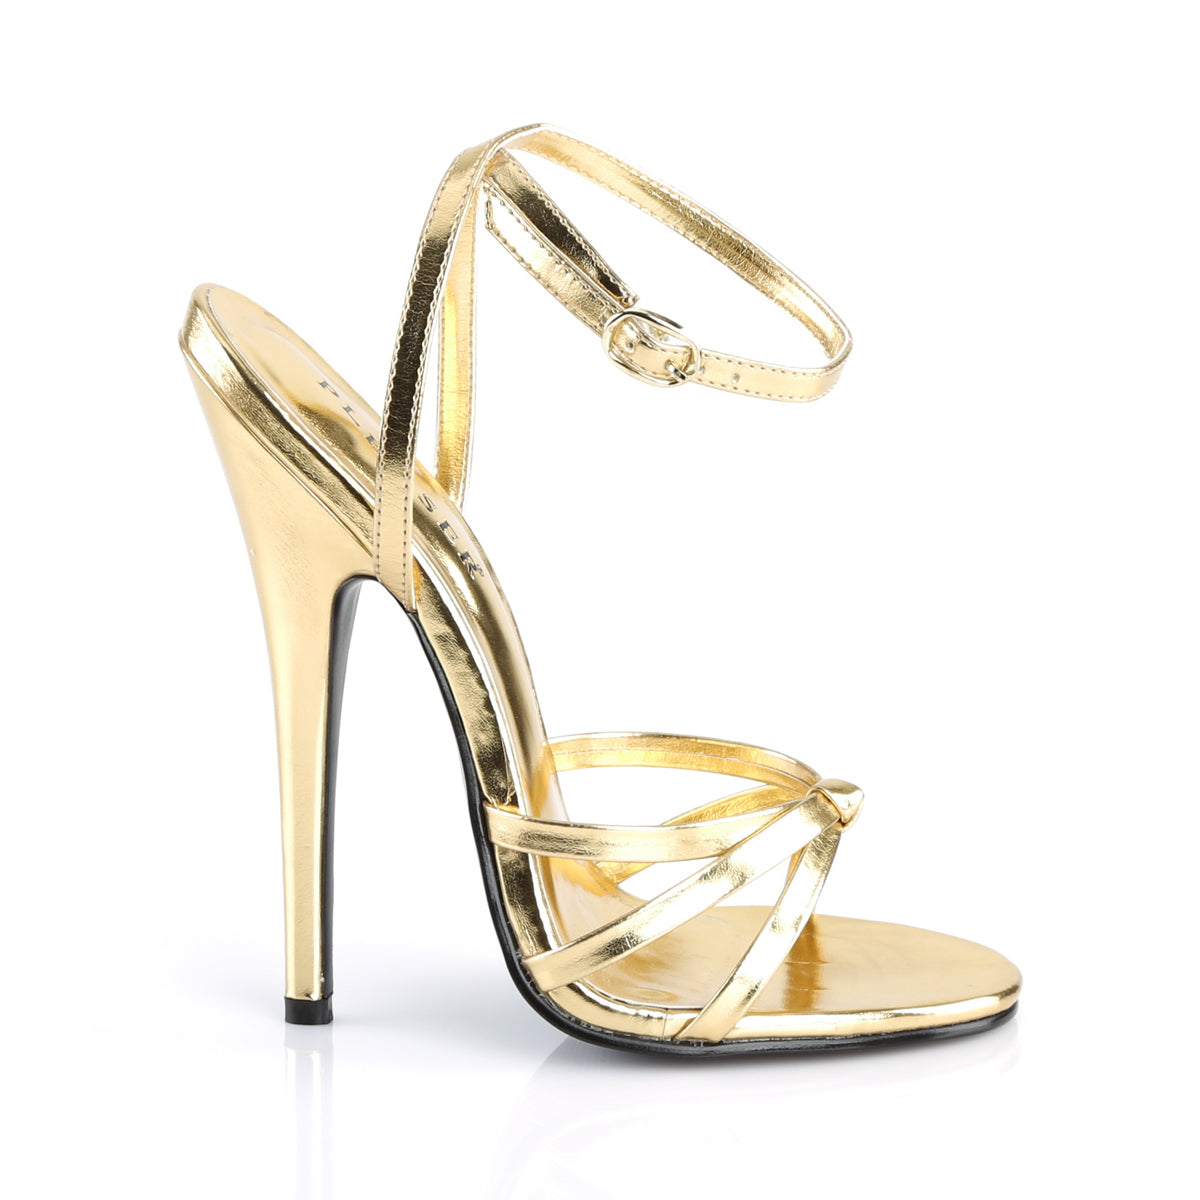 DOMINA-108 Gold 6 Inch Heel Sandals